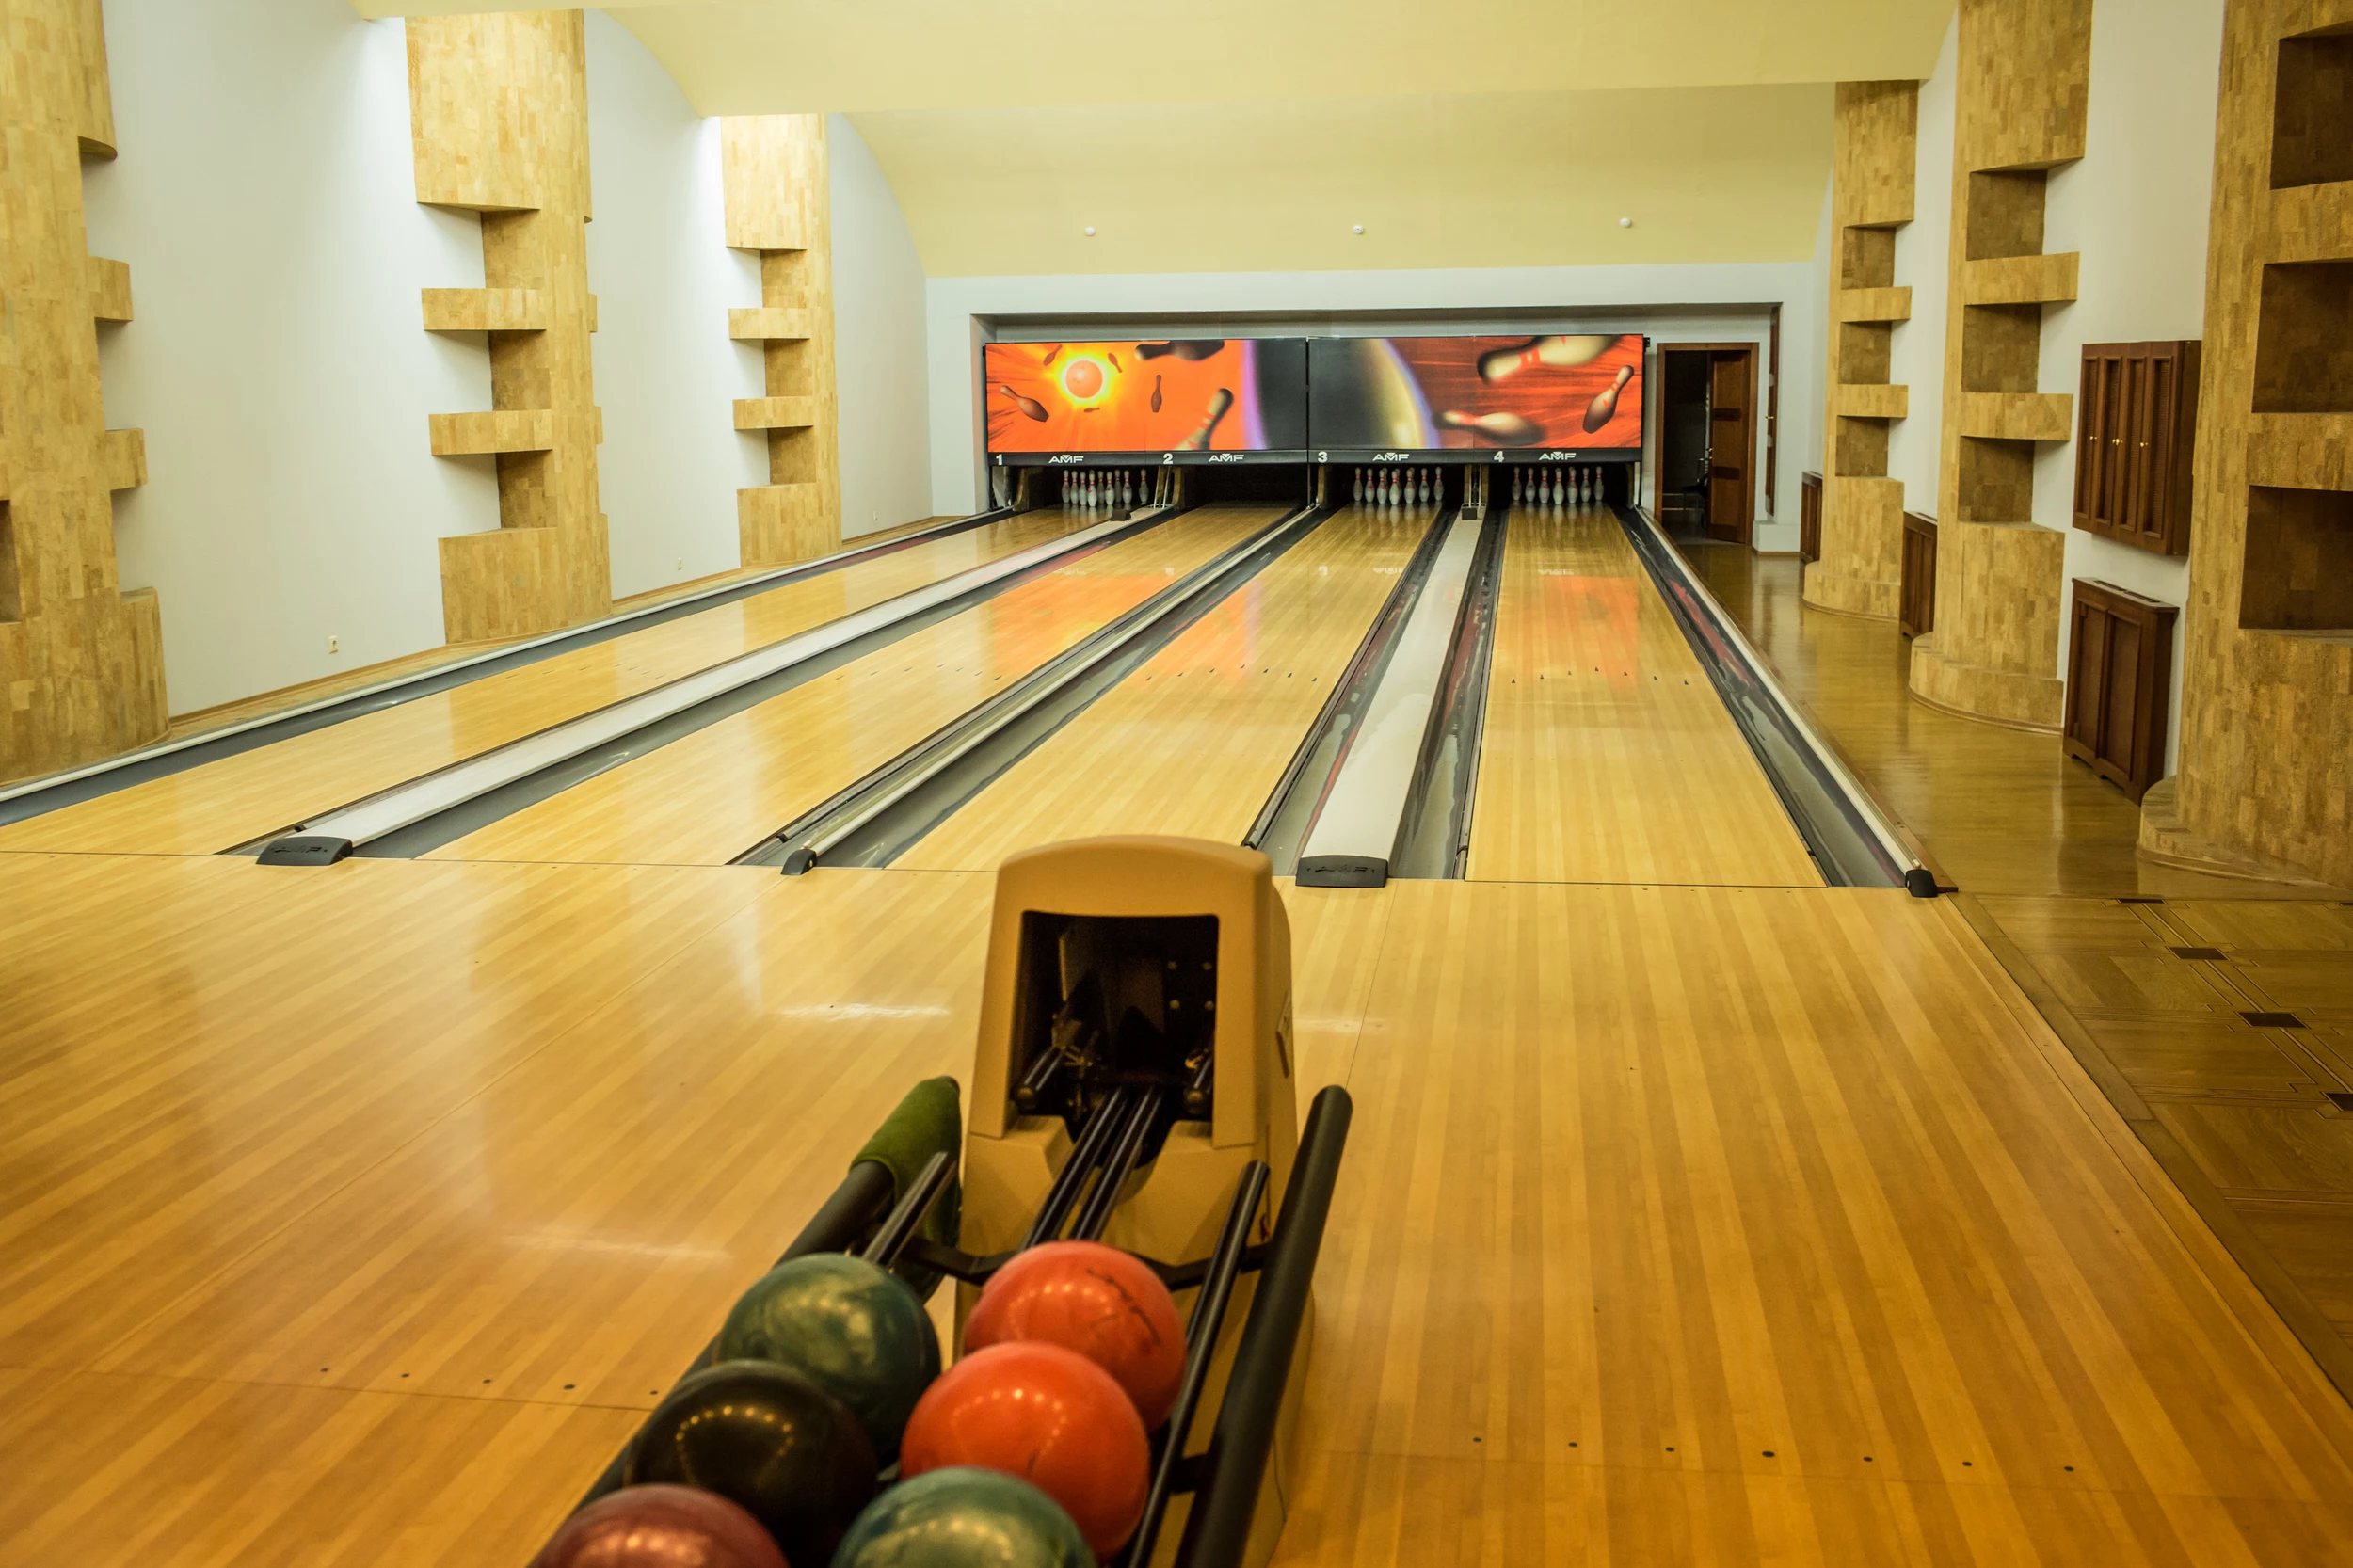 Mobile bowling alley brings fun to Atlanta